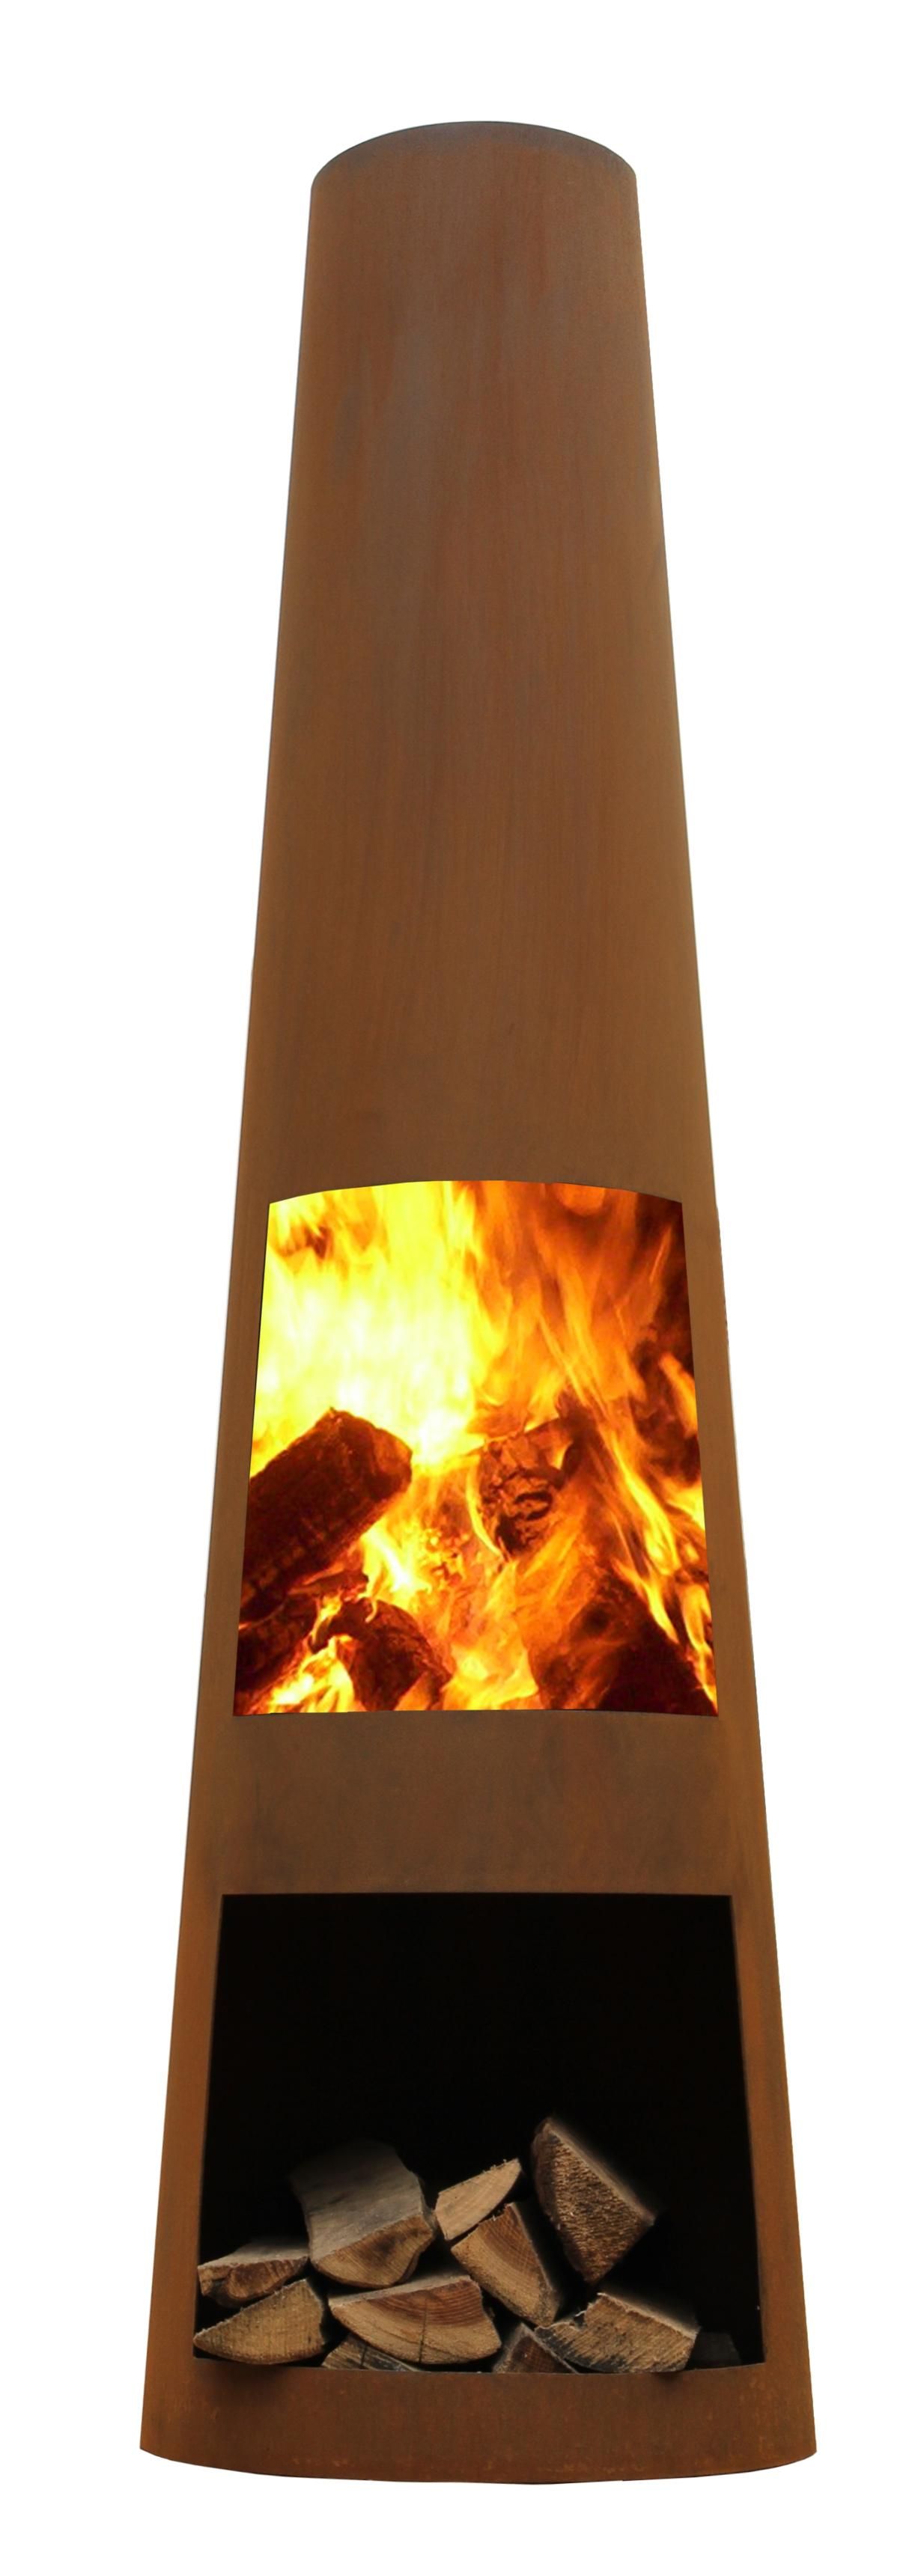 GardenMaxX Rengo Corten Fireplace